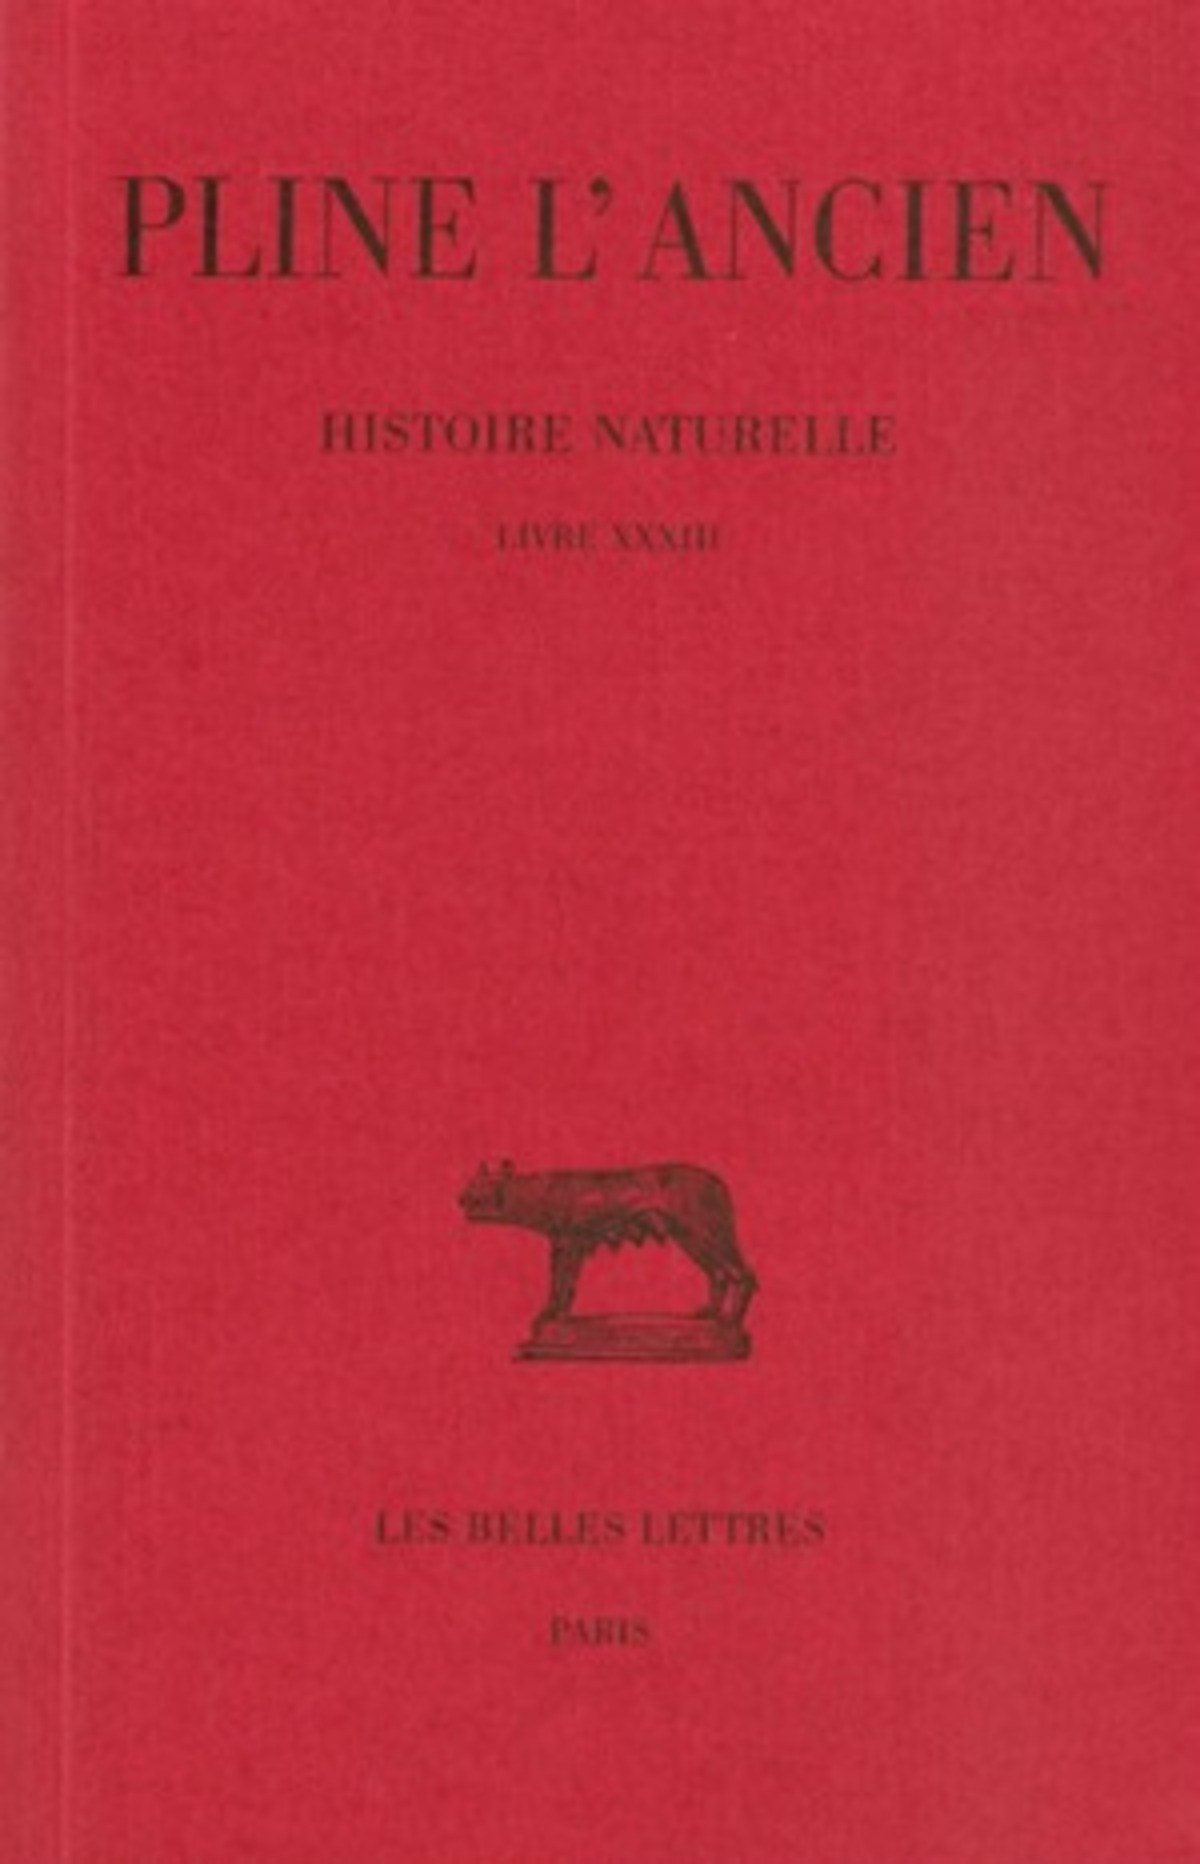 Histoire naturelle. Livre XXXIII